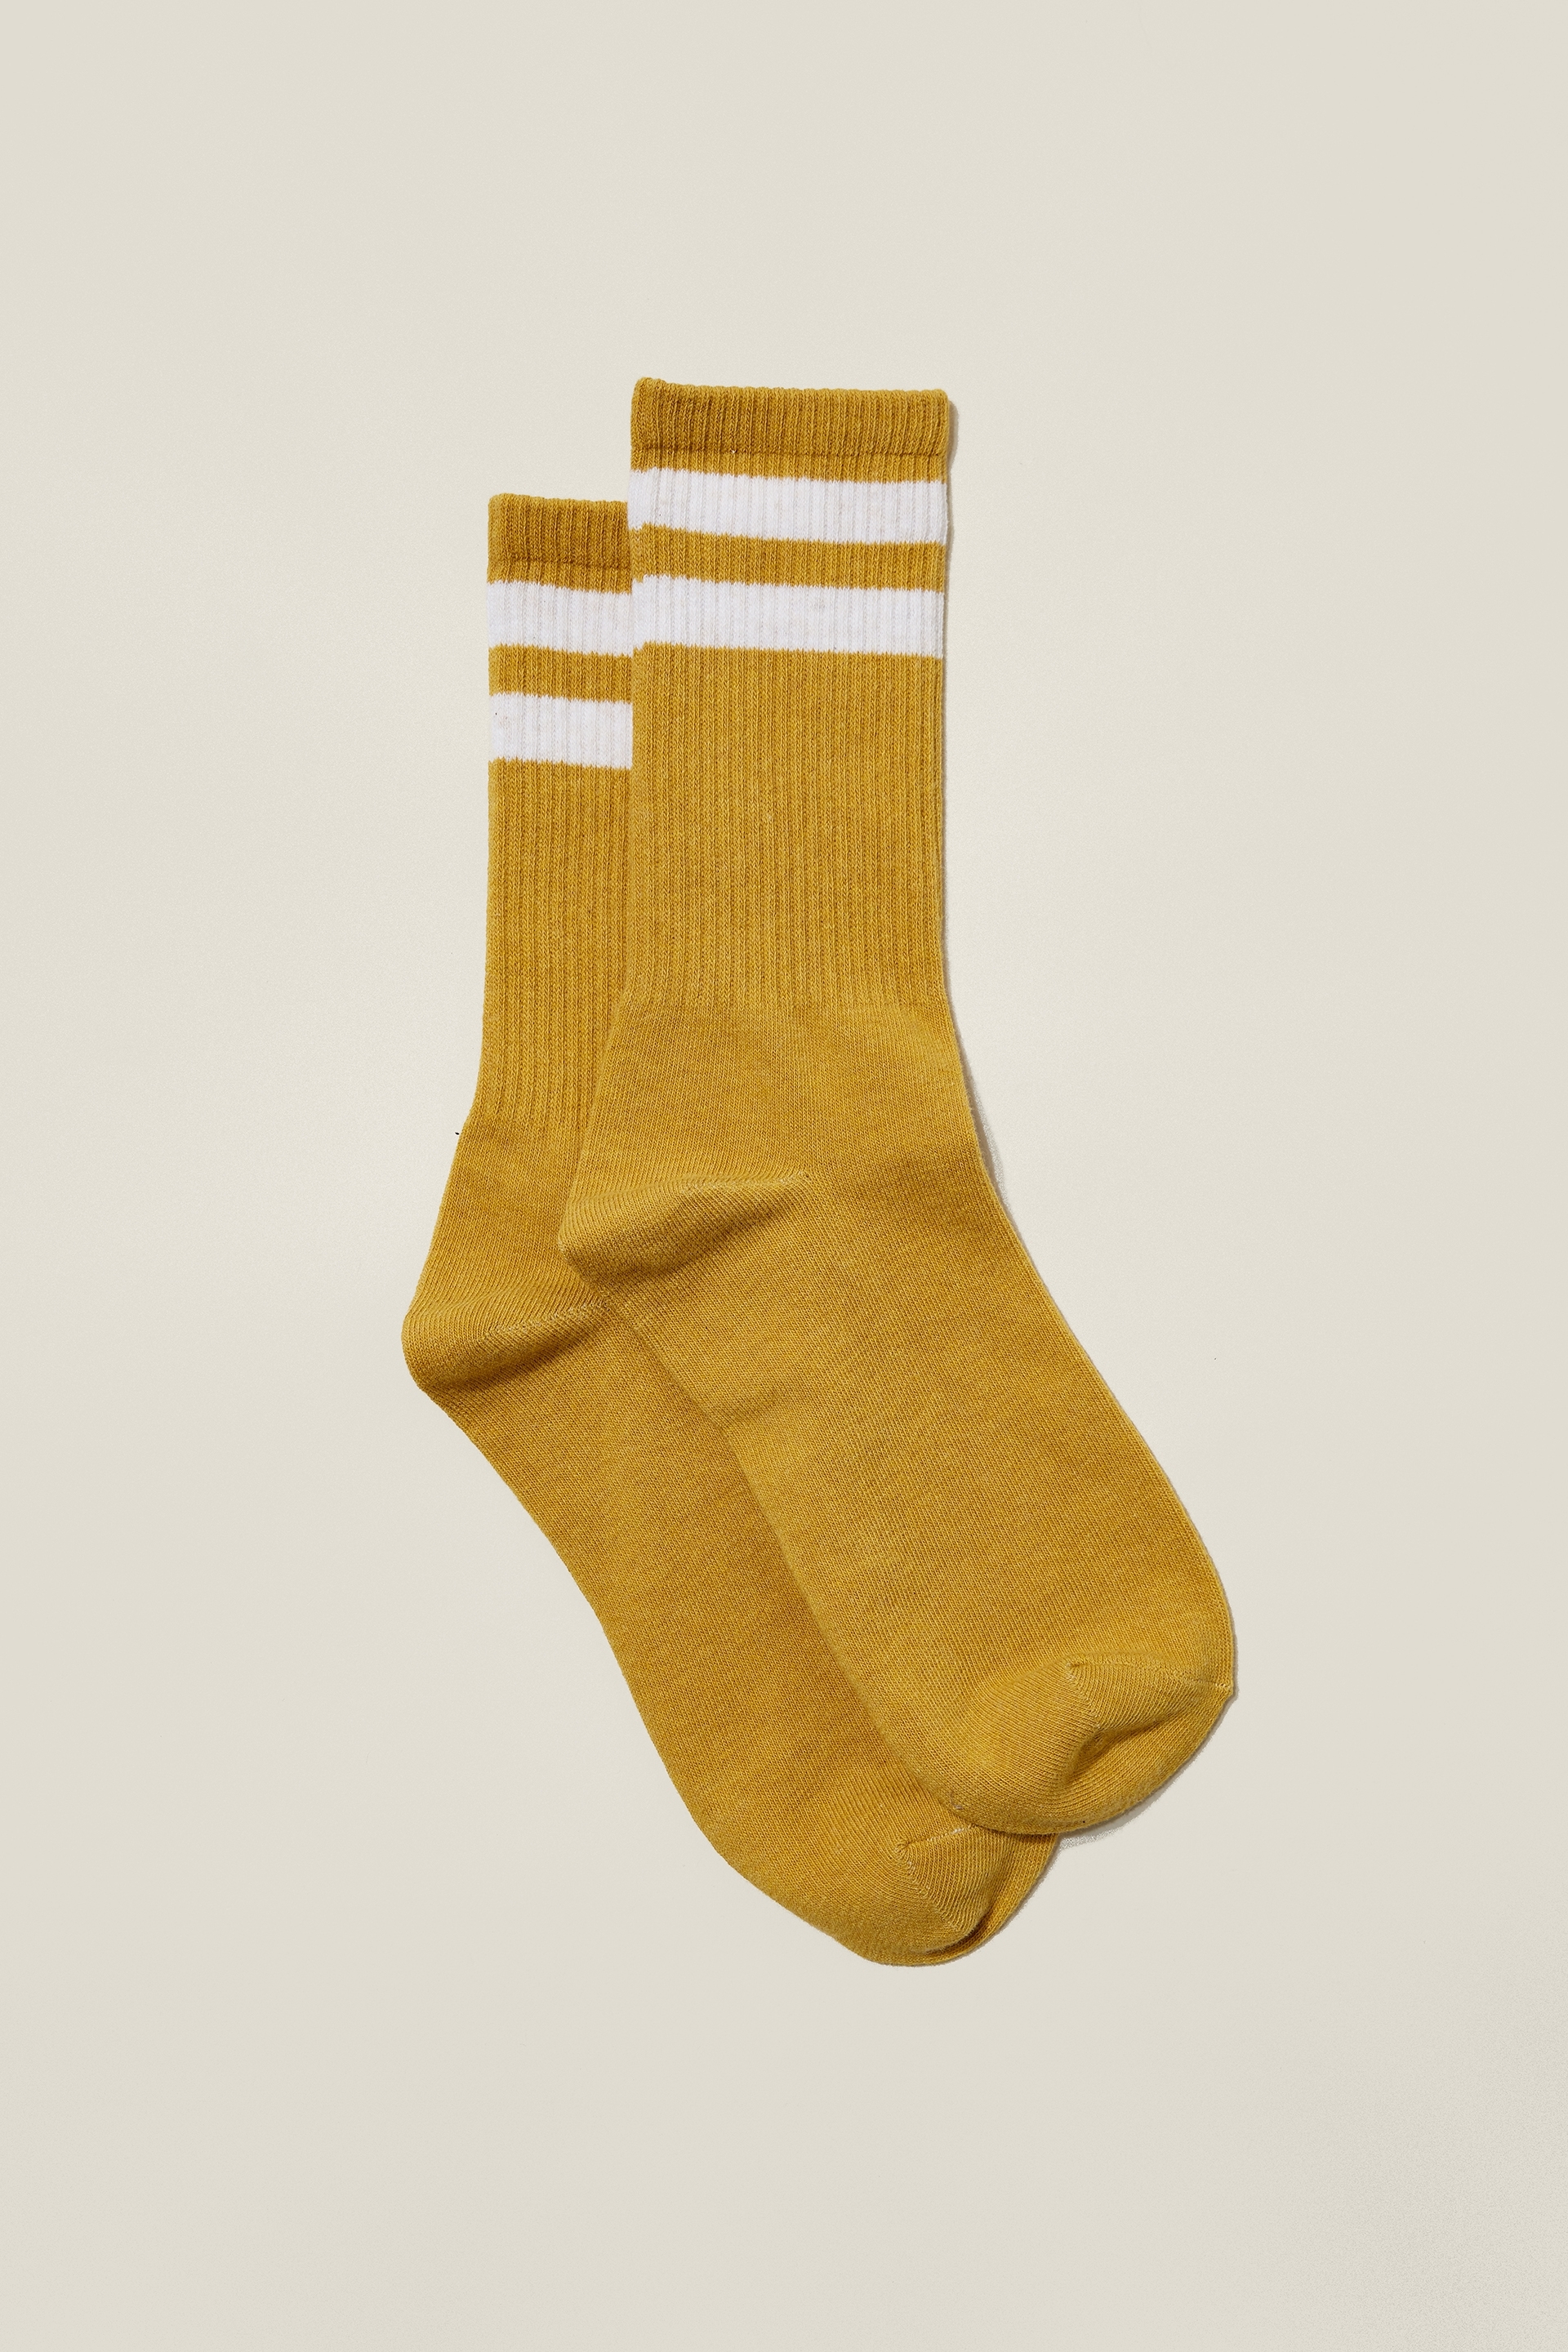 Rubi - Club House Crew Sock - Mustard marle/white stripe